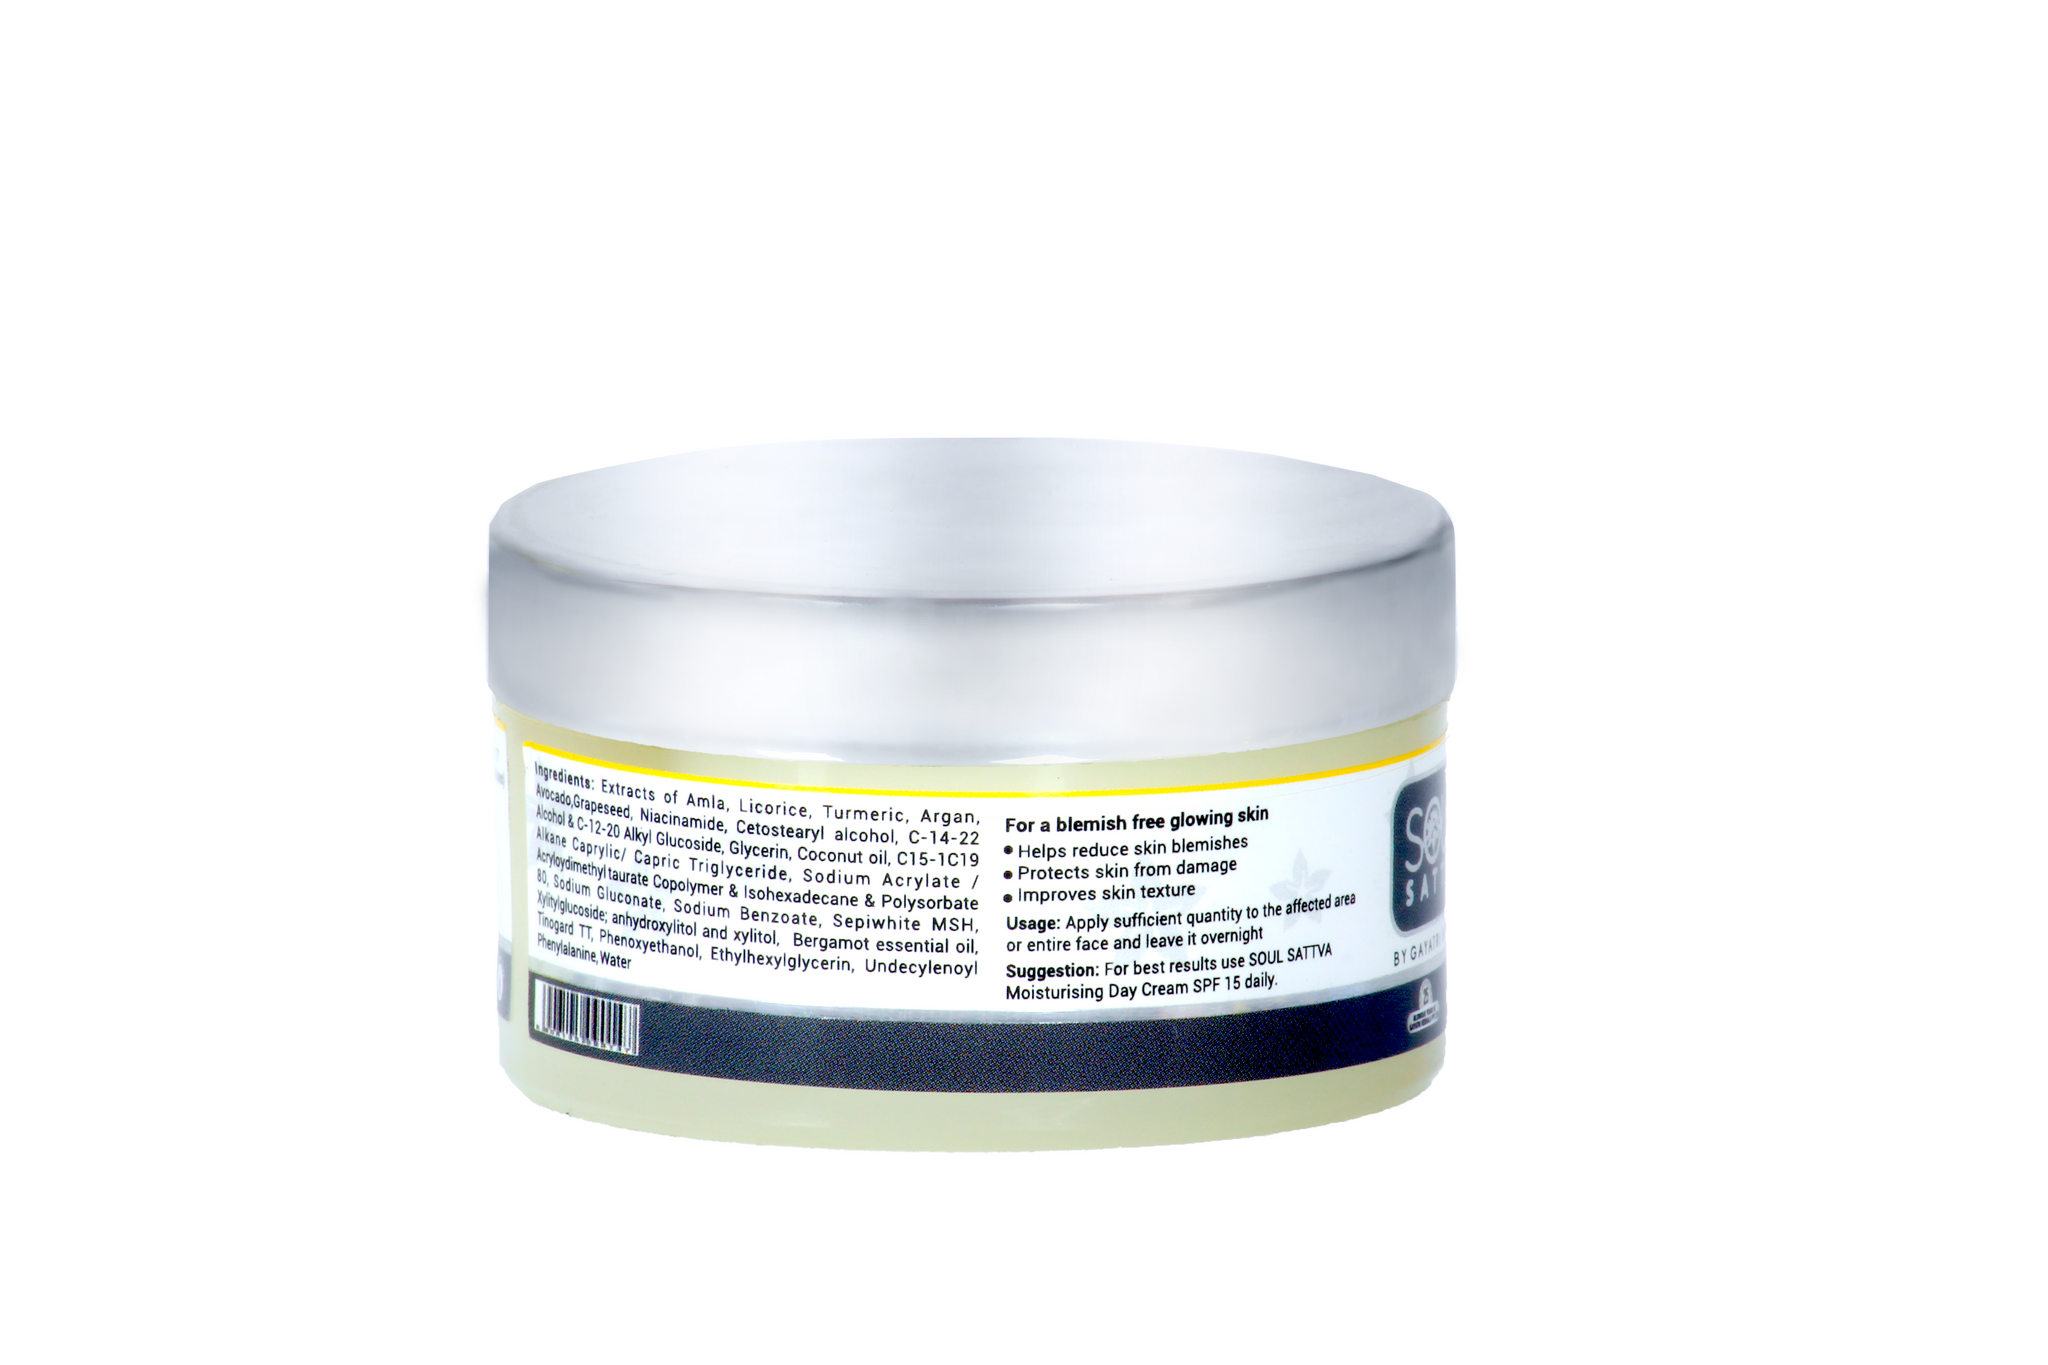 Anti Blemish Cream - 50 gms ( Amla I Licorice I Turmeric )